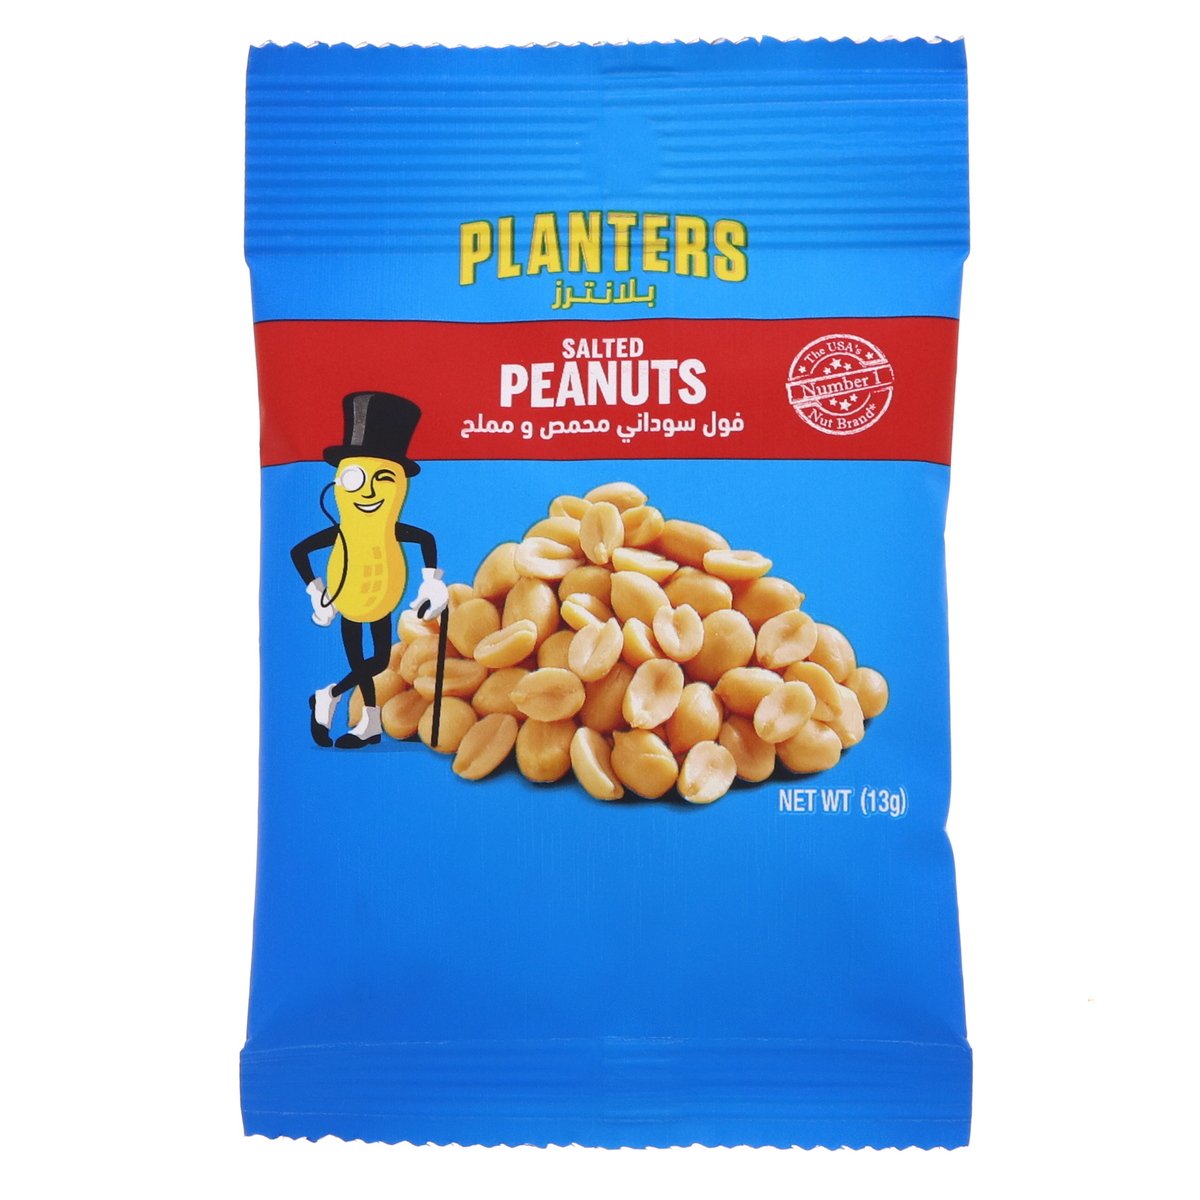 Planters Salted Peanuts 13 g